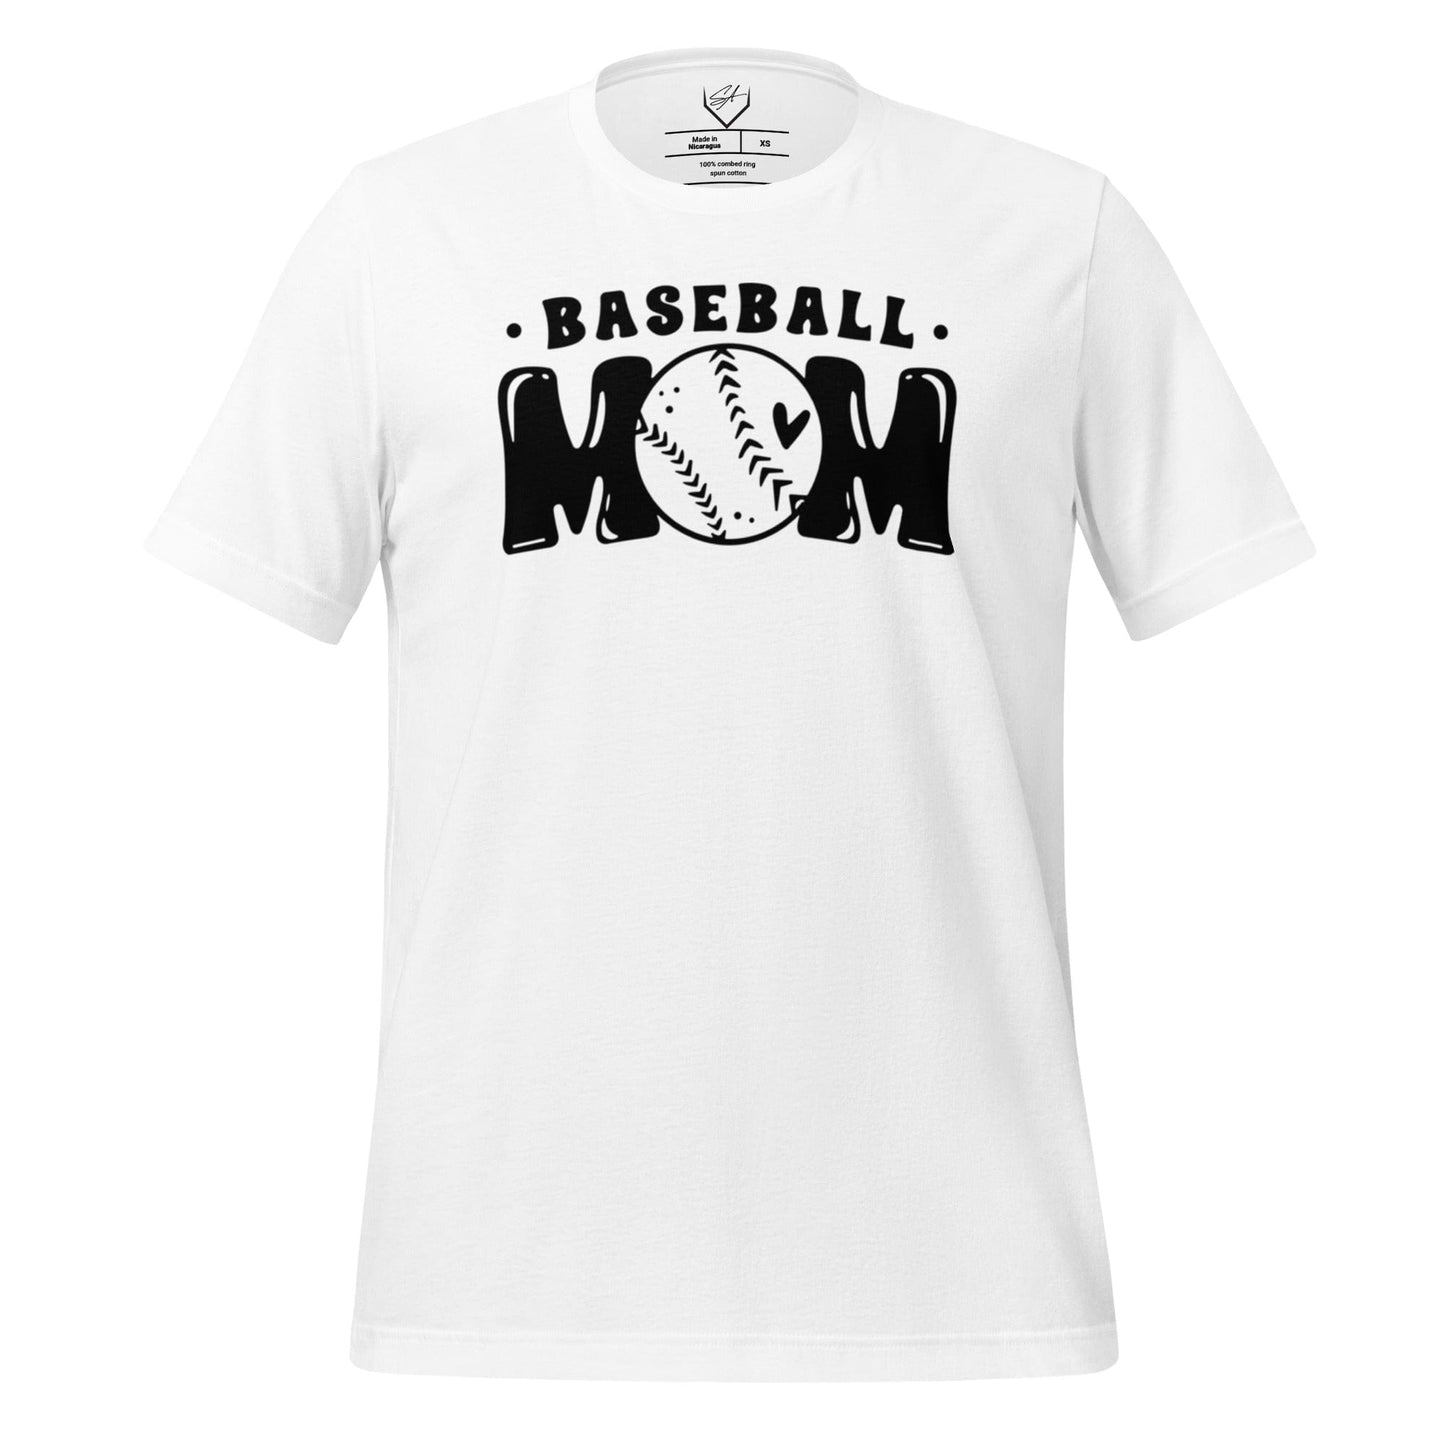 Baseball Mom - Adult Tee